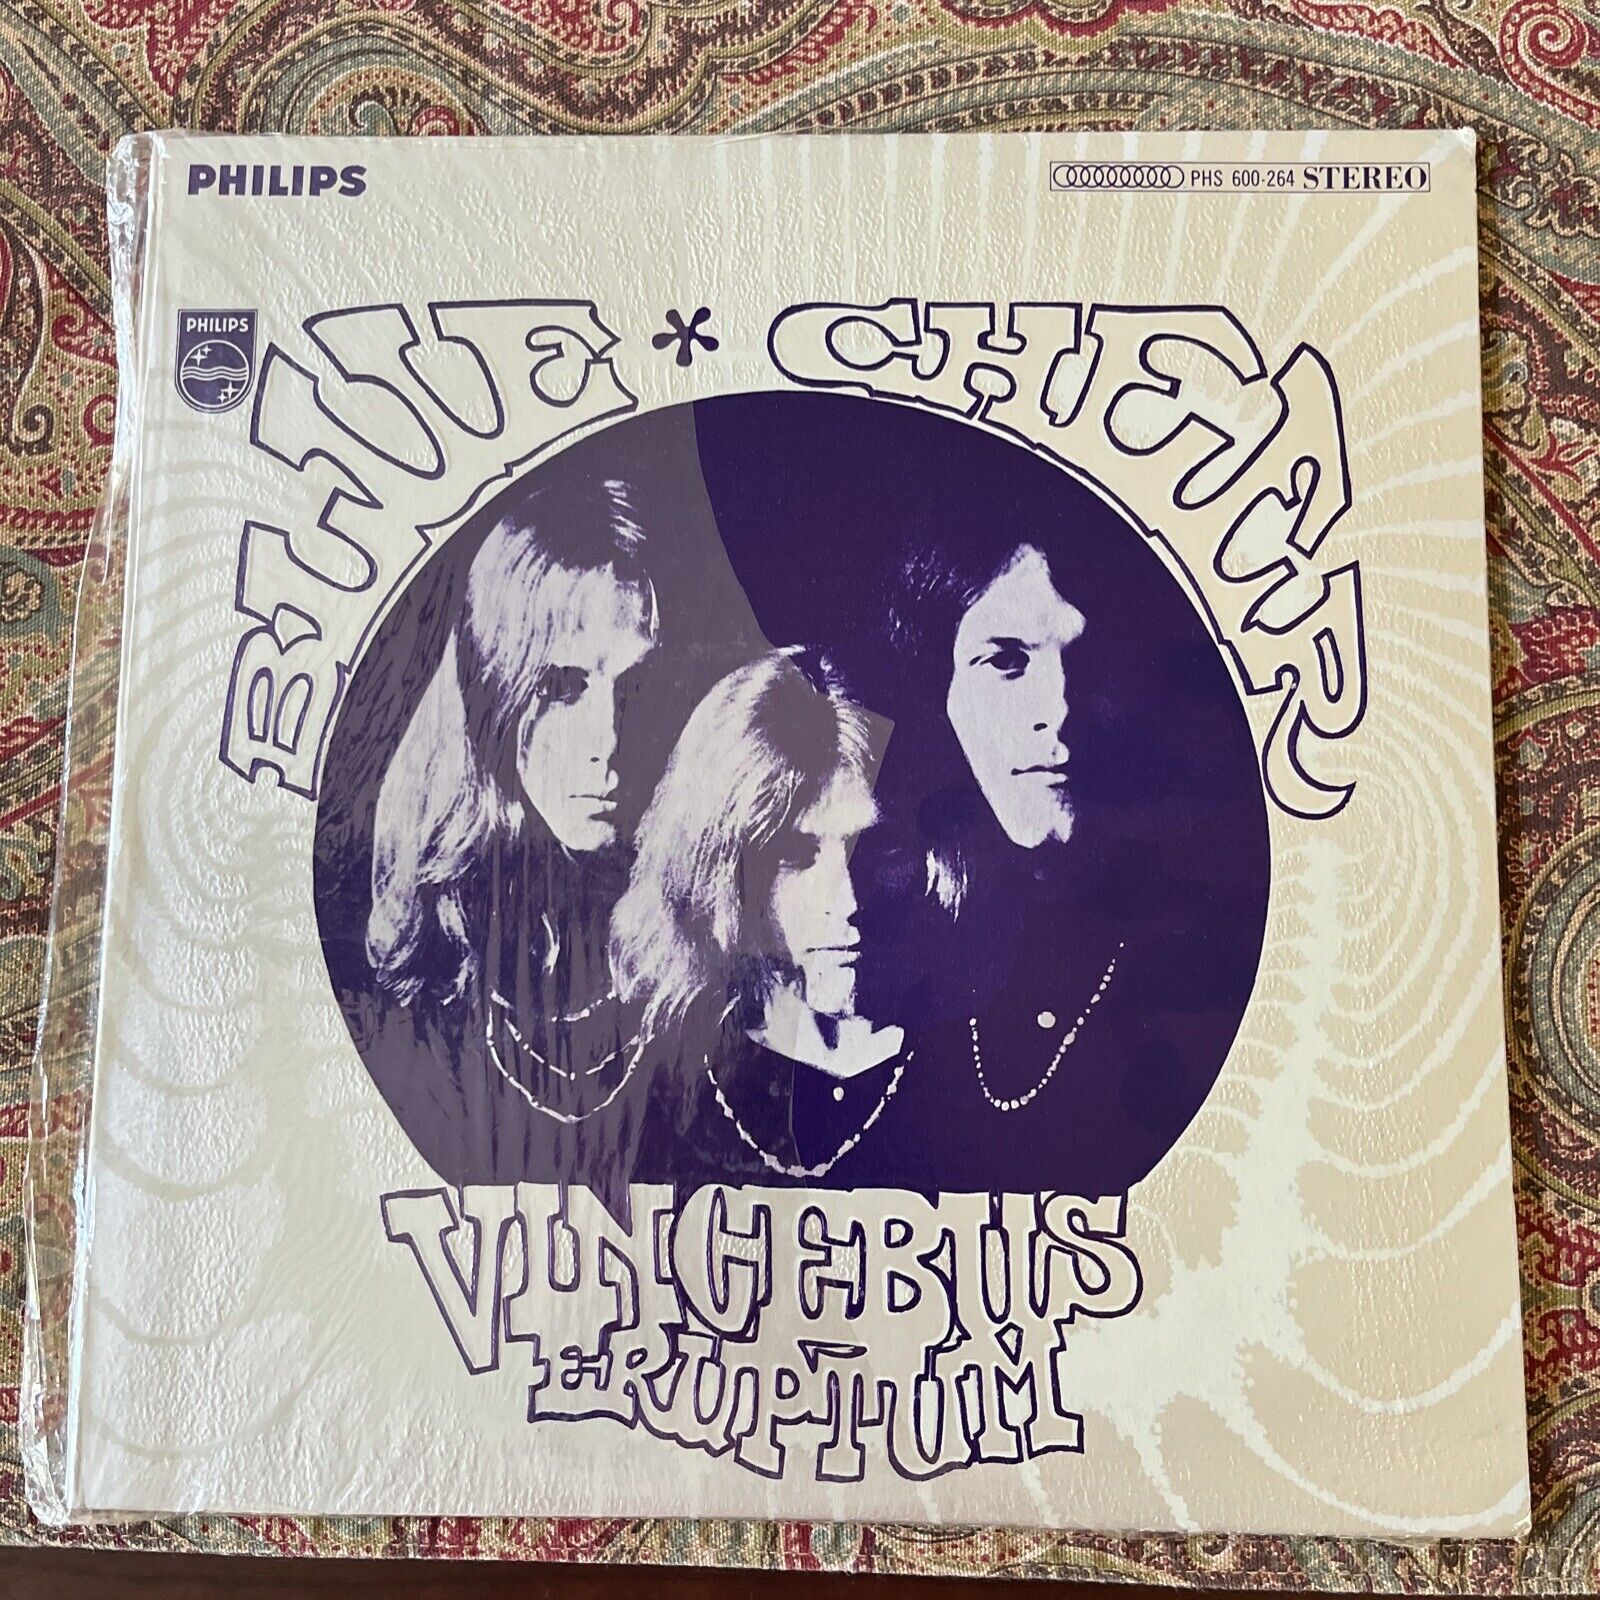 Blue Cheer - Vincebus Eruptum Vinyl 1968 PHS 600-264 Philips